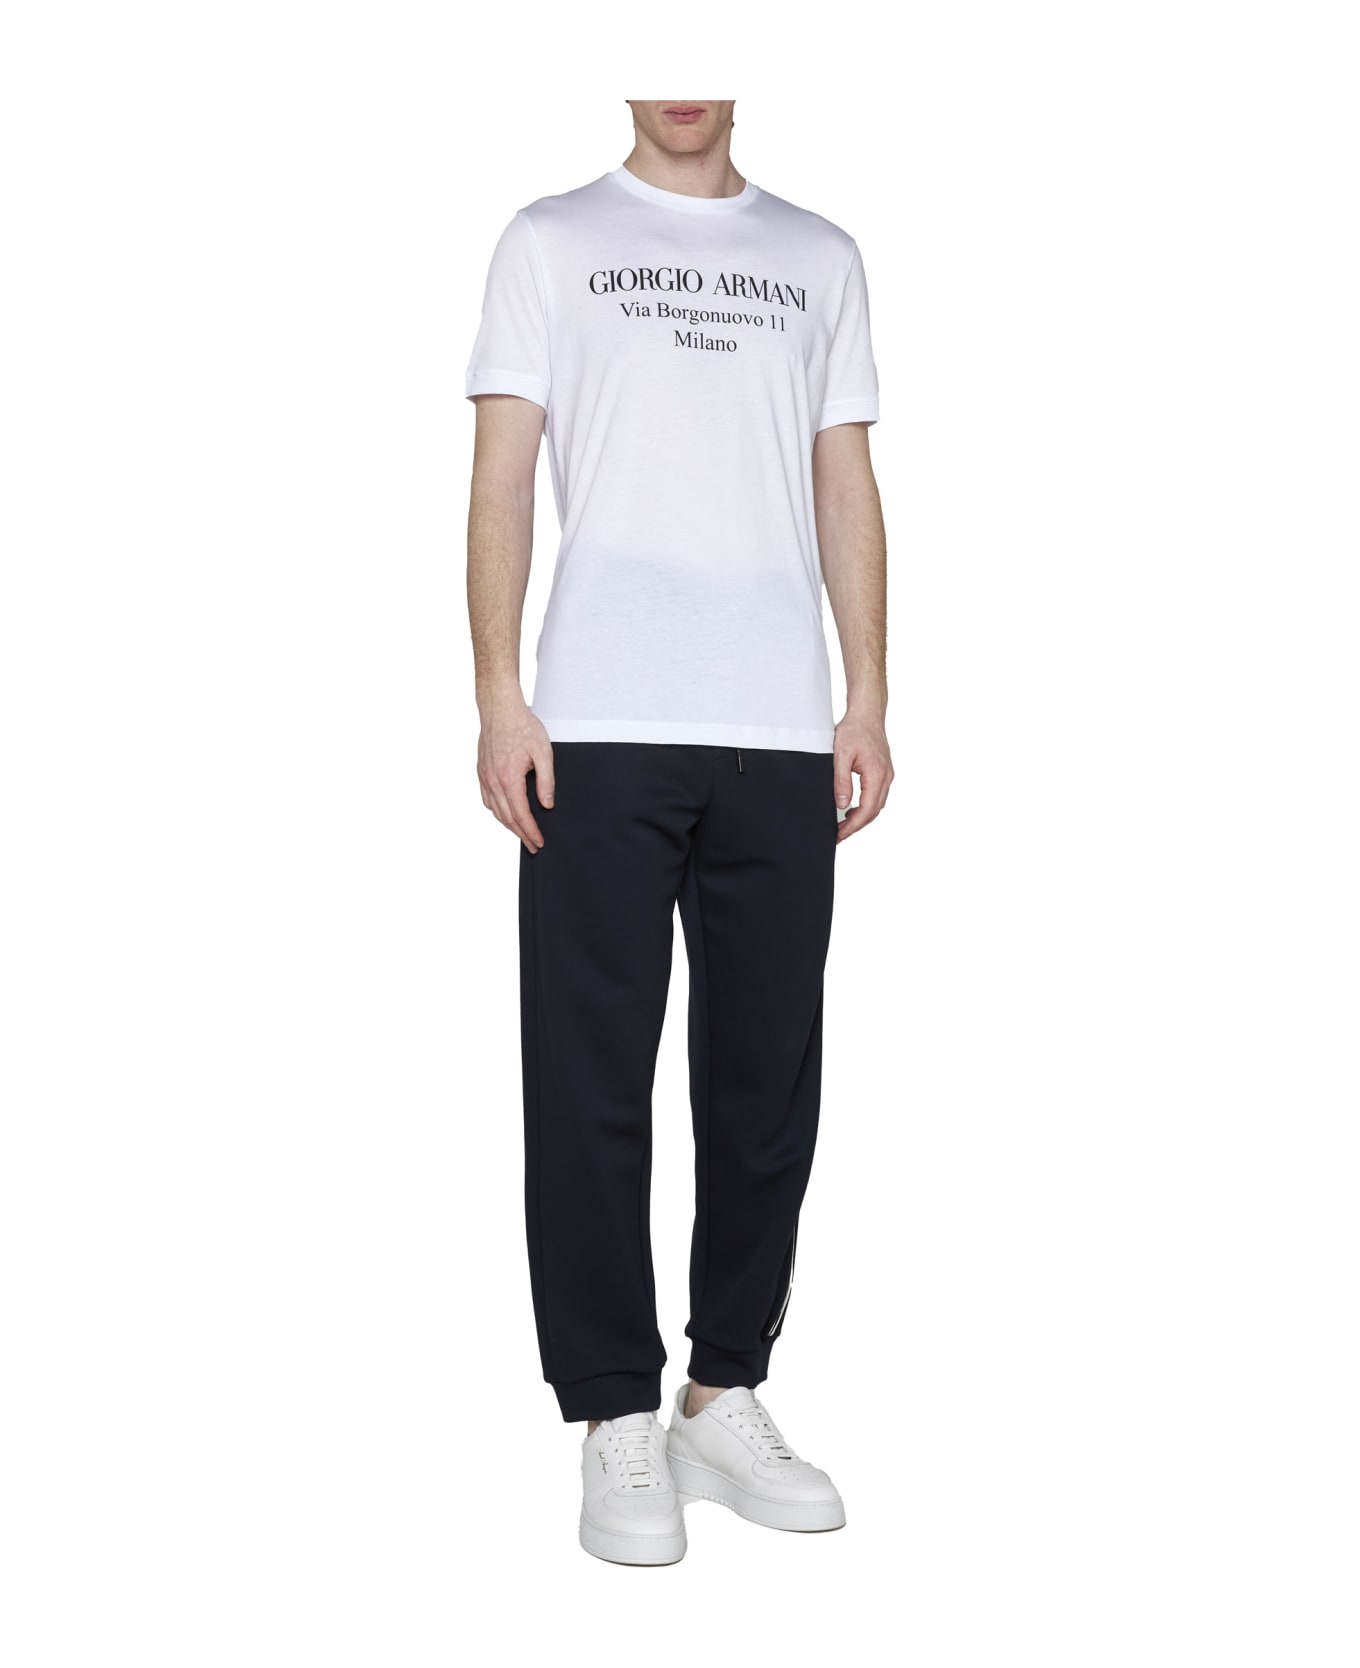 Giorgio Armani til T-Shirt - Bianco ottico